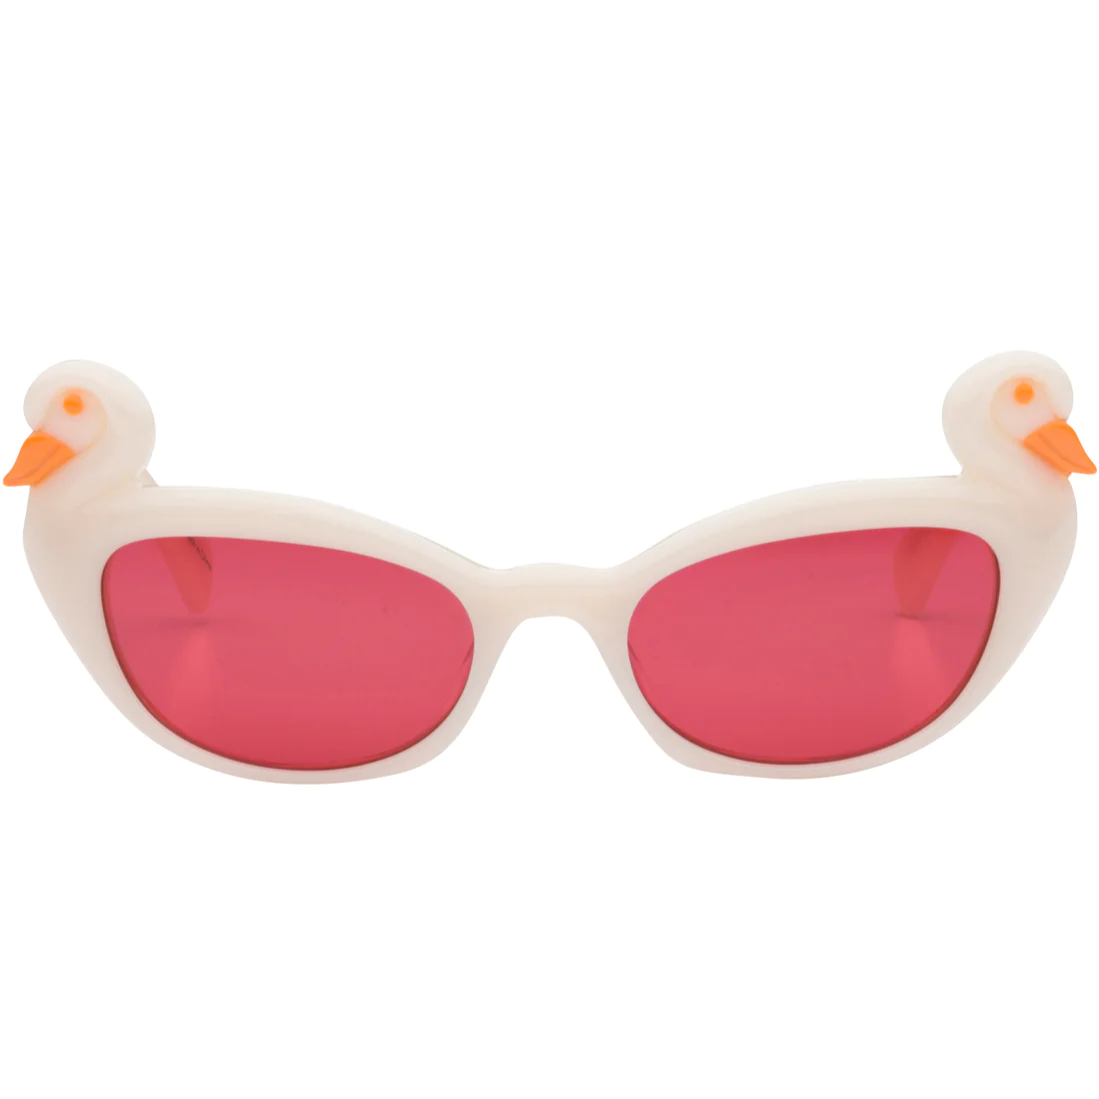 Swan Sunglasses